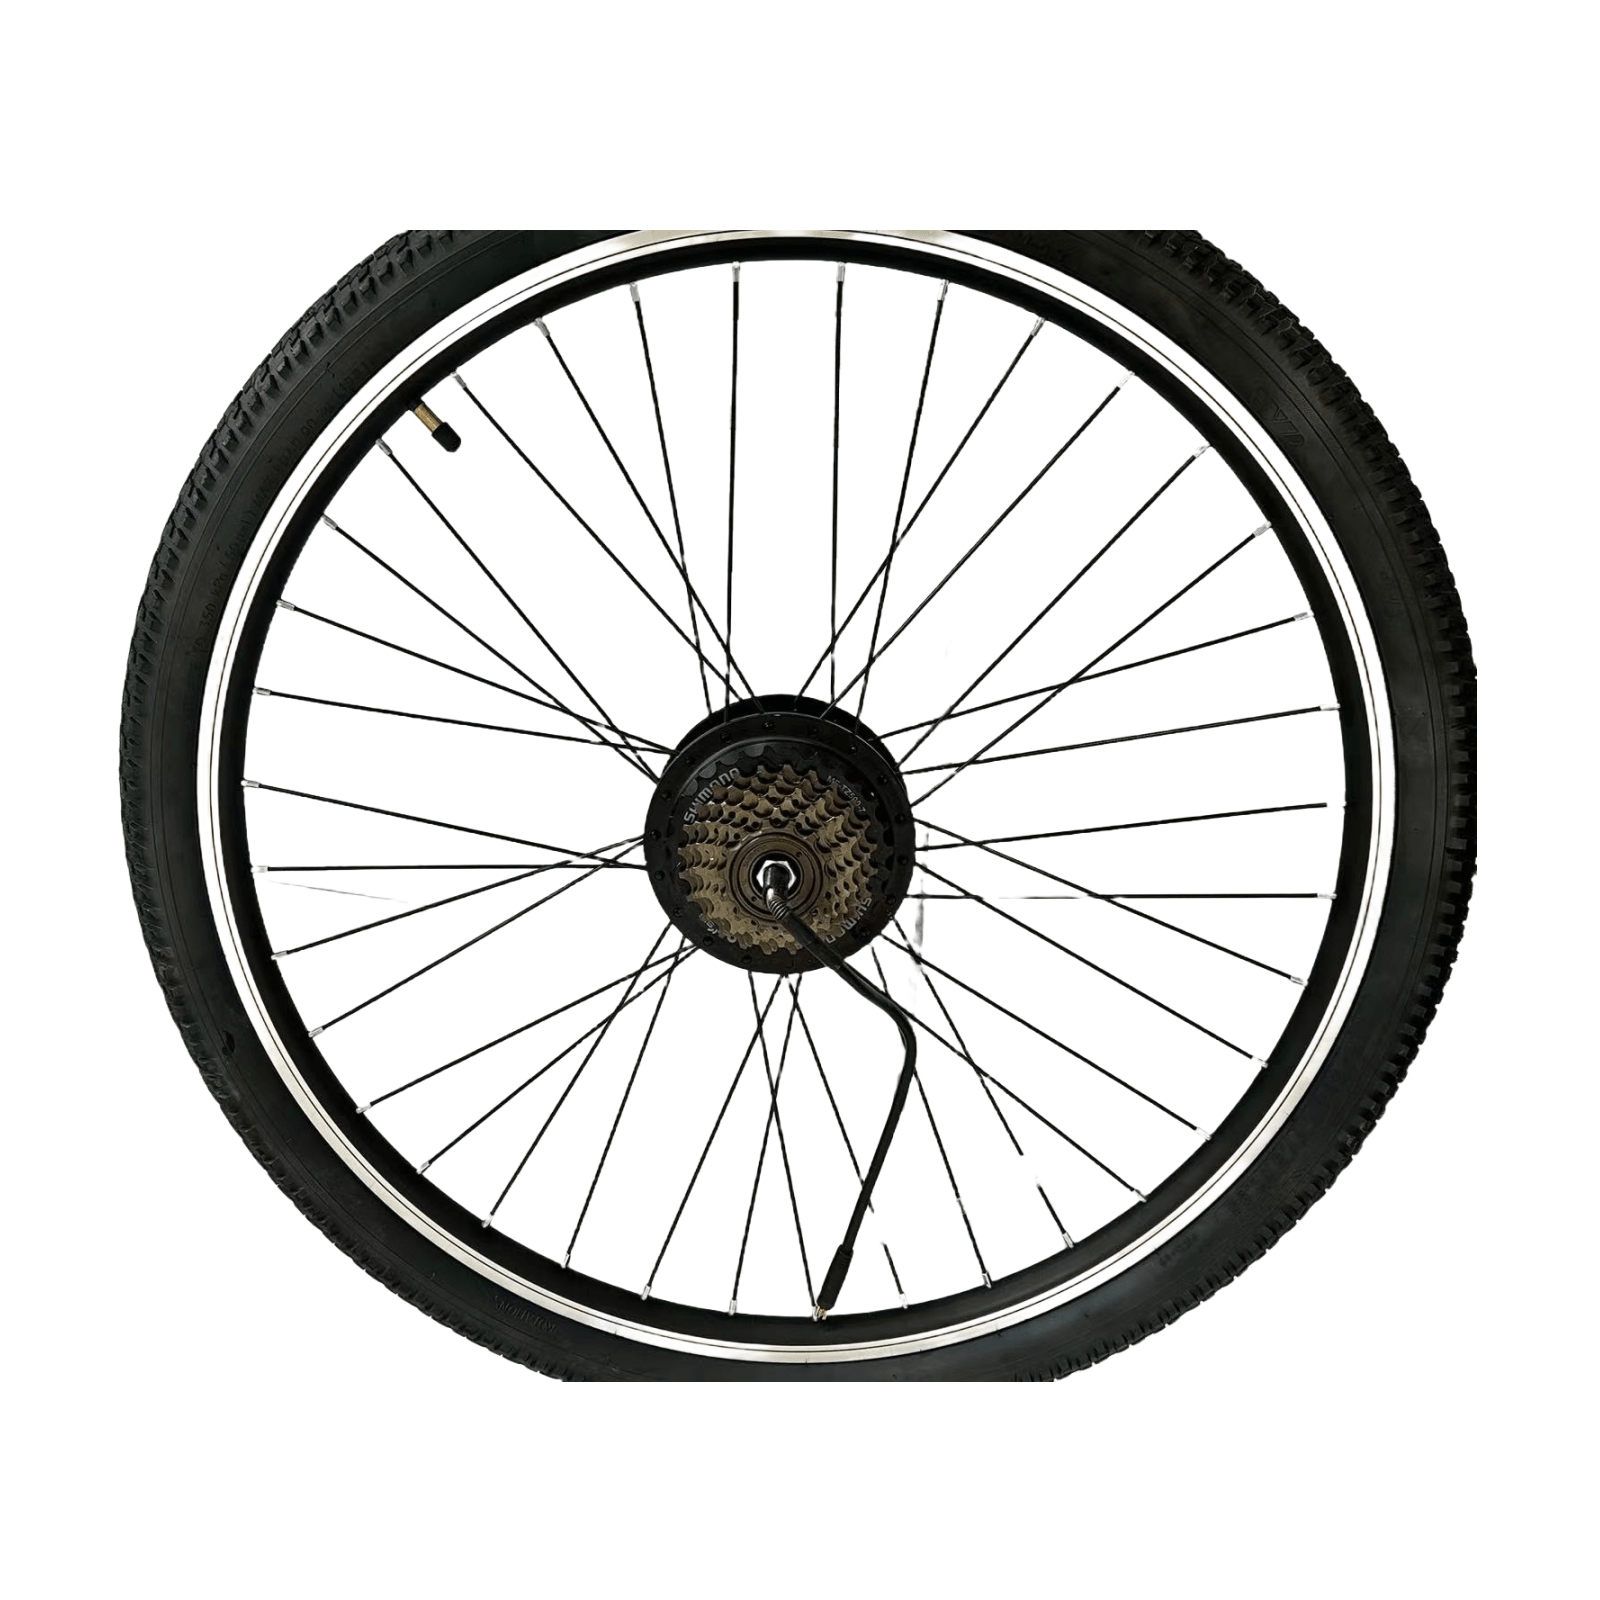 Electric bicycle wheel set - C INVERTER Electric bike